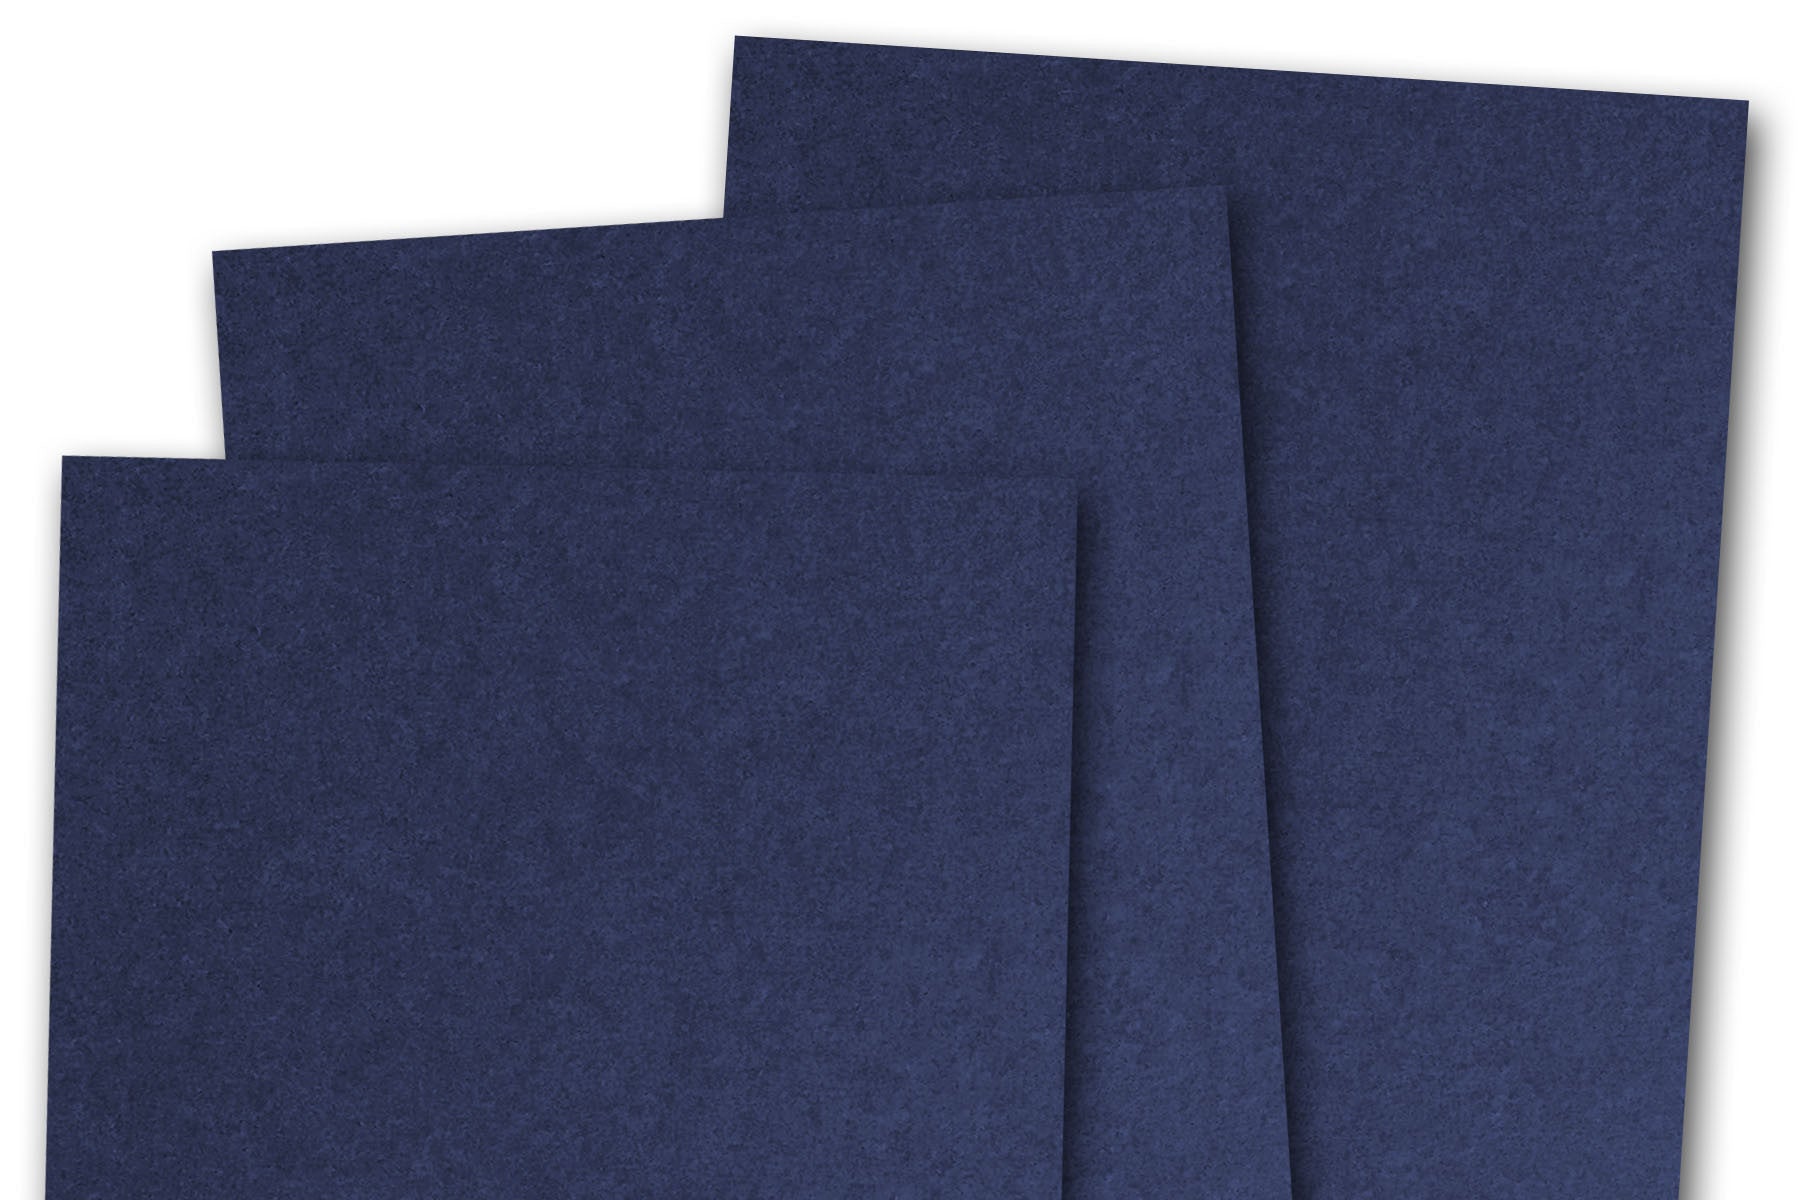 SALE!! 8.5 x 11 CARDSTOCK PAPER - LIGHT BLUE/DARK BLUE - 10 SHEETS -  NEW!!